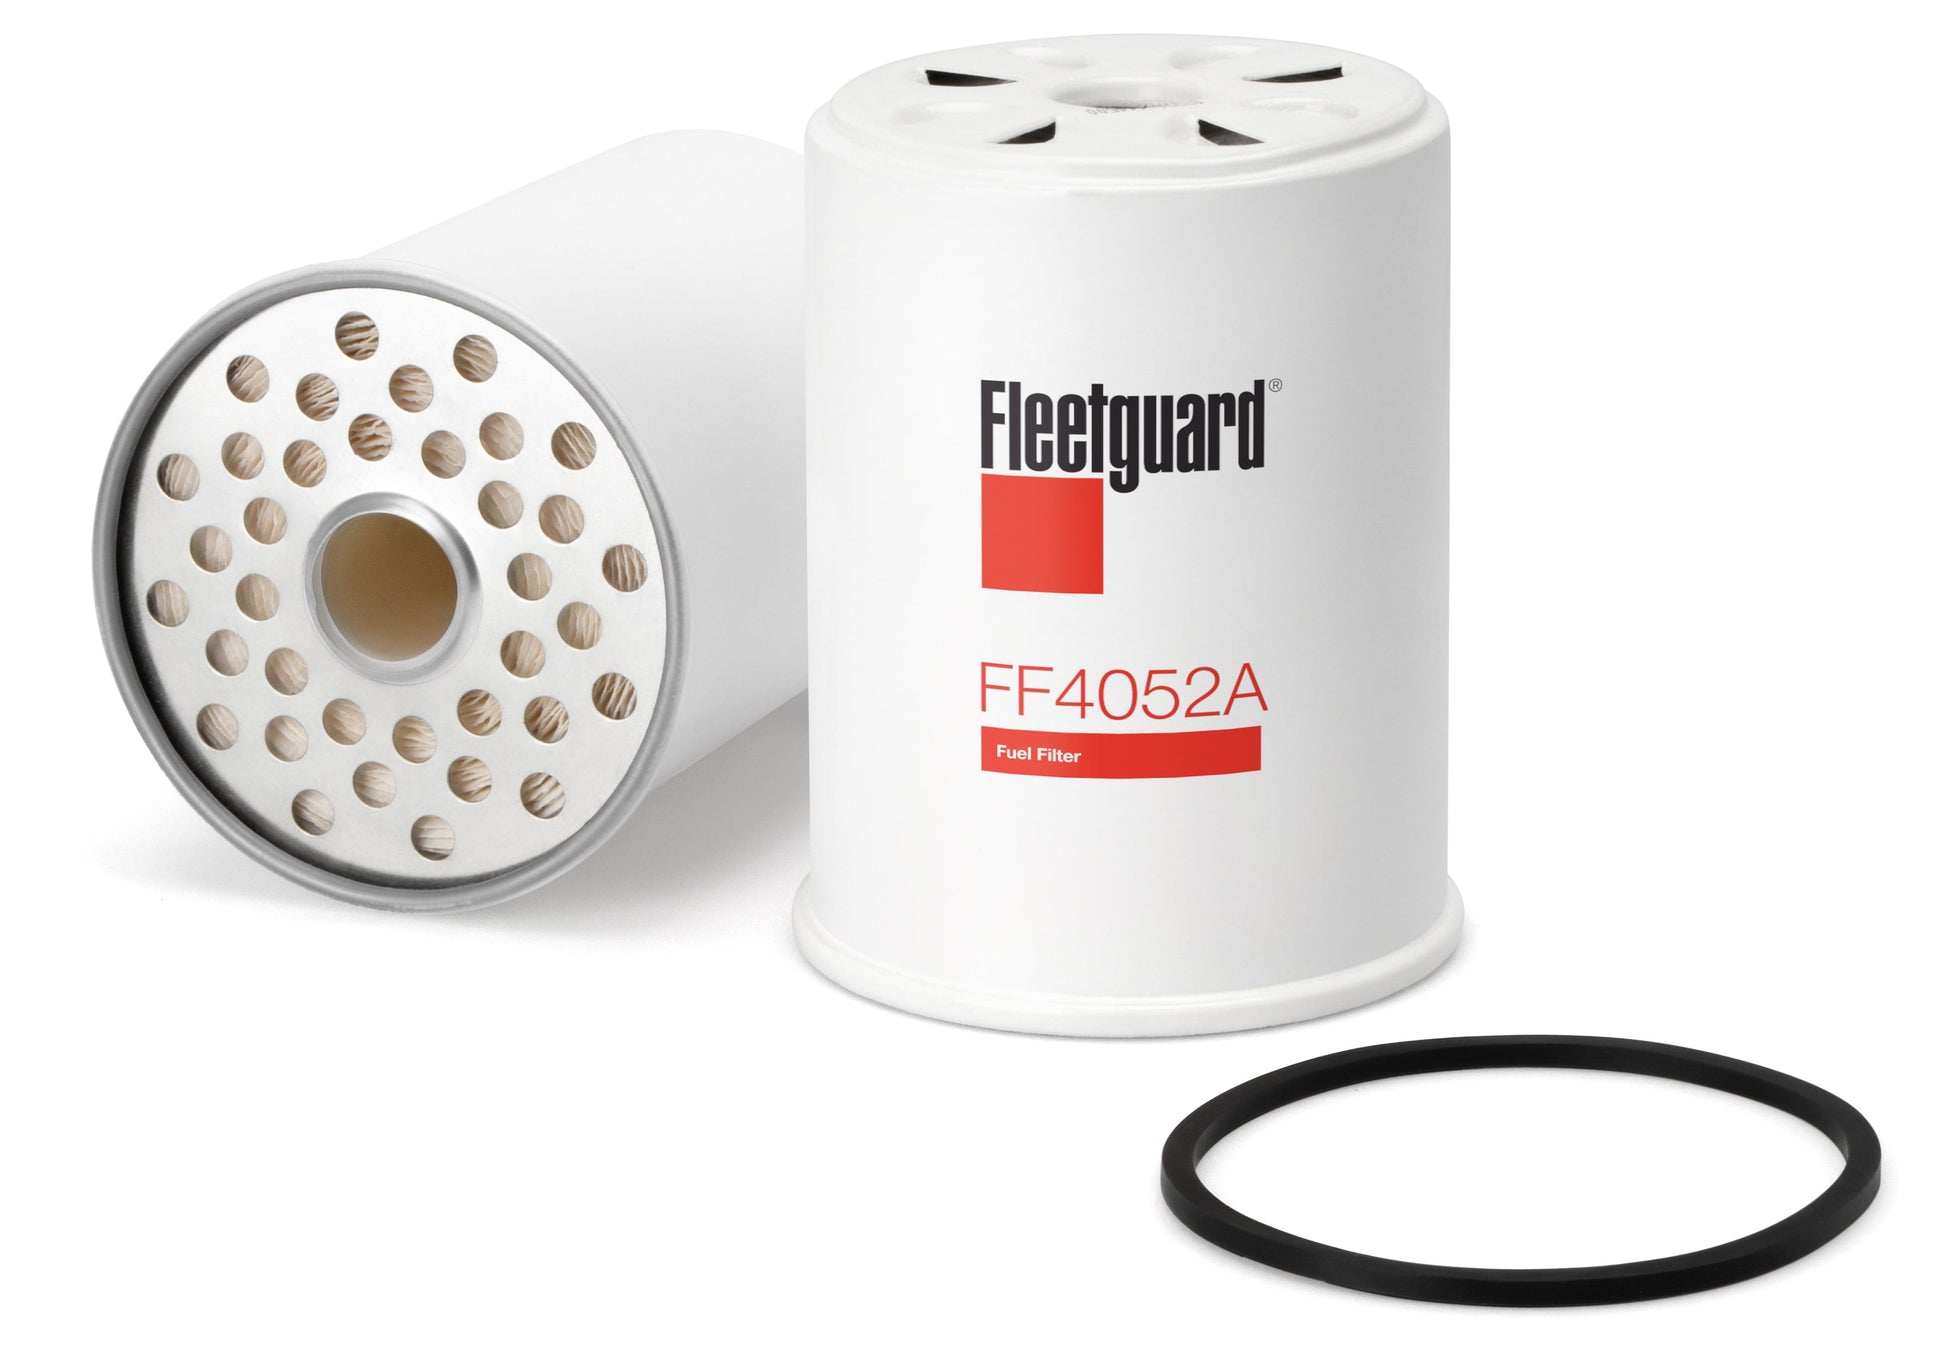 Fleetguard Fuel Filter - Fleetguard FF4052A